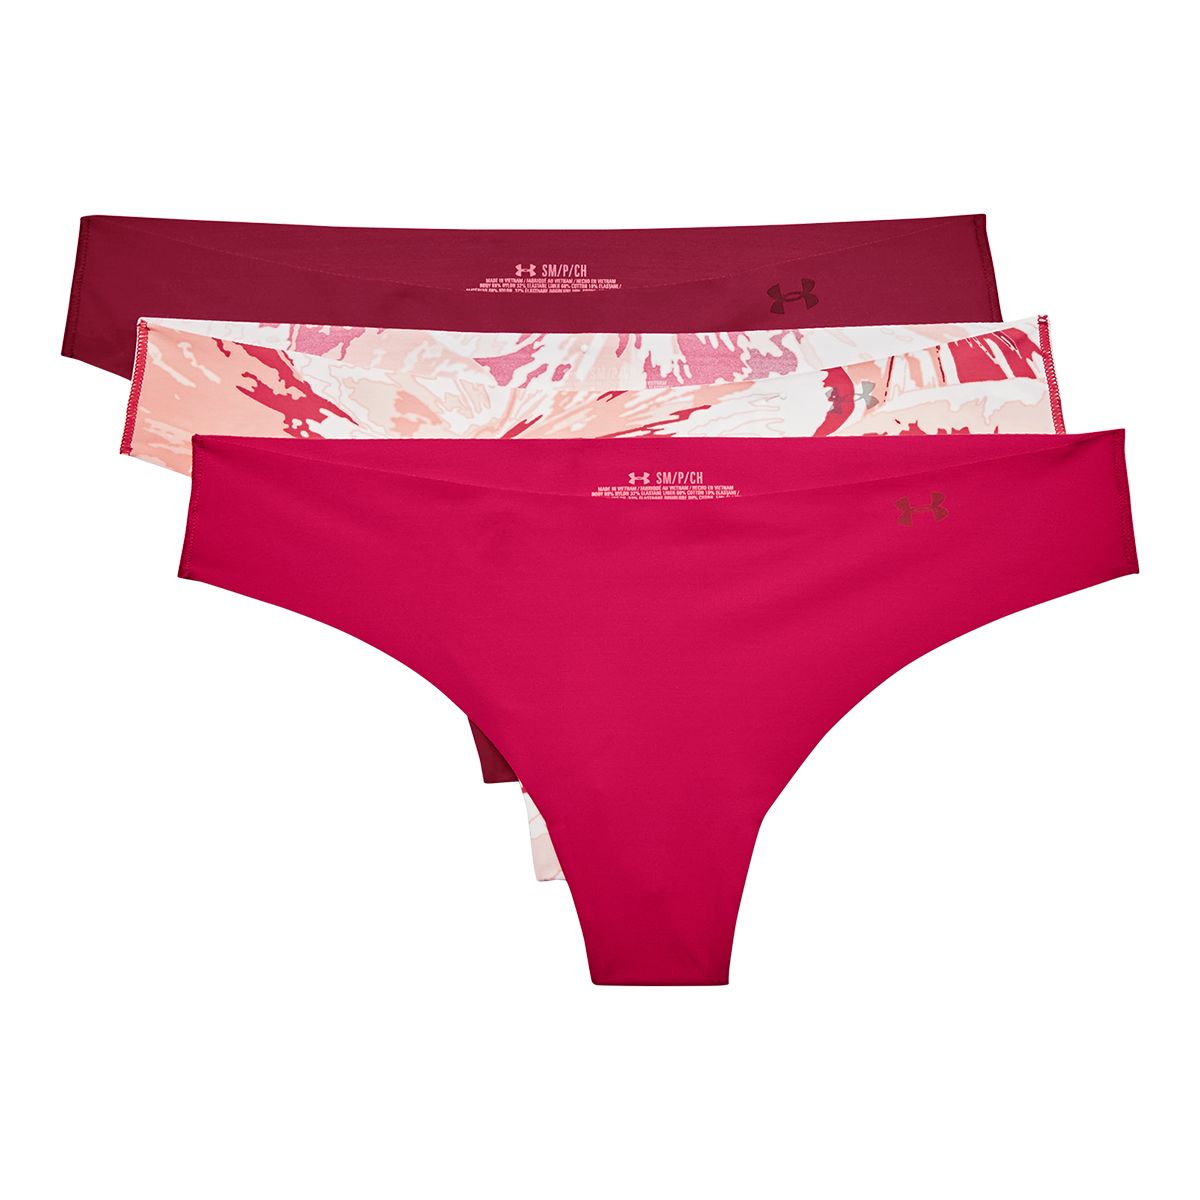 New Balance Women's Hybrid Soft Jersey mesh Panels Thong Underwear (Pack of  1)